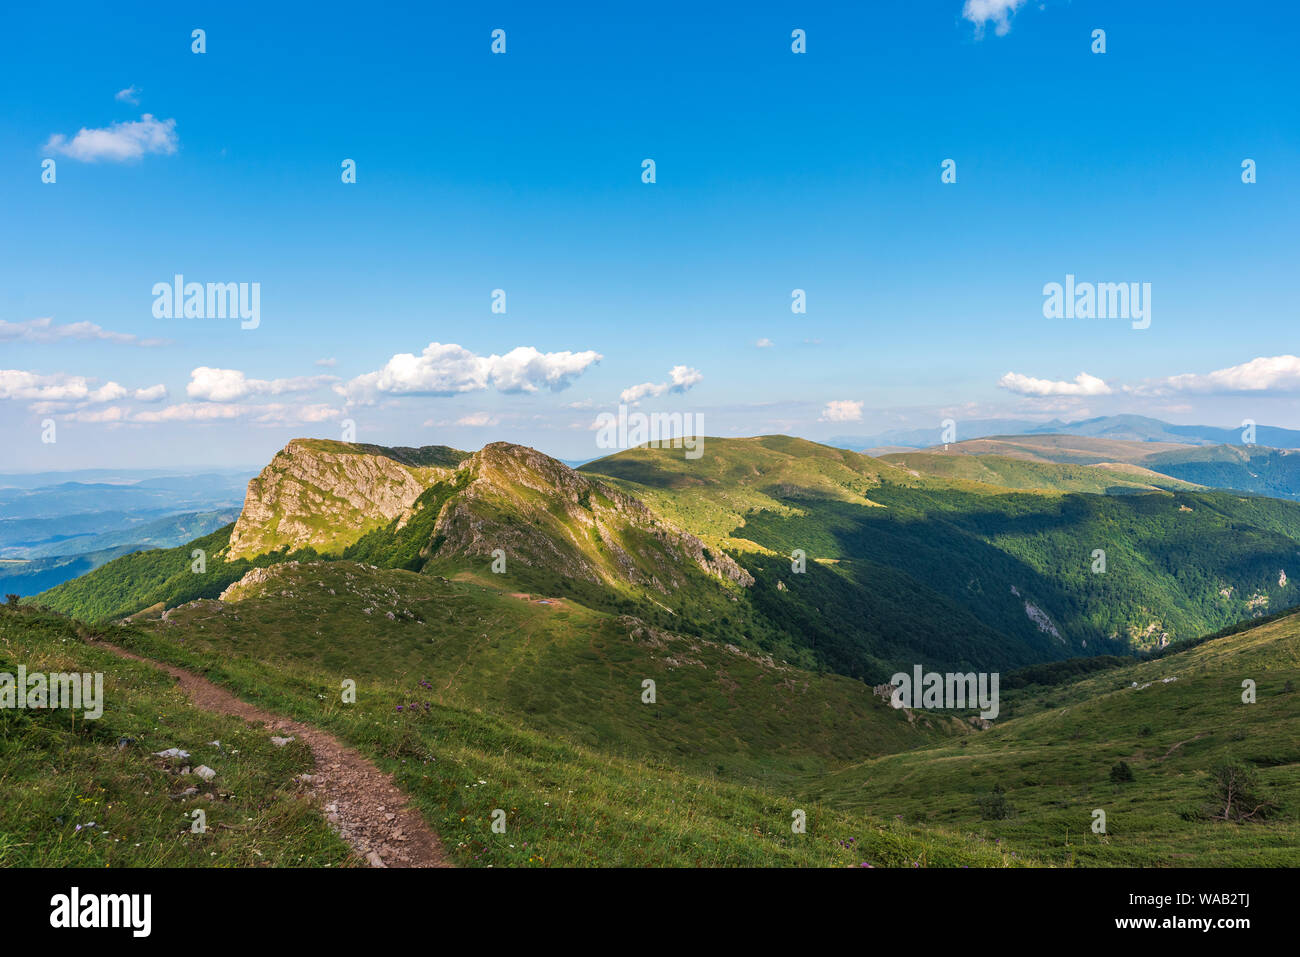 Sommer Panorama vom Alten Berg (Stara Planina), Bulgarien. Central Balkan National Park, kozia Stena (Ziege) finden. Stockfoto